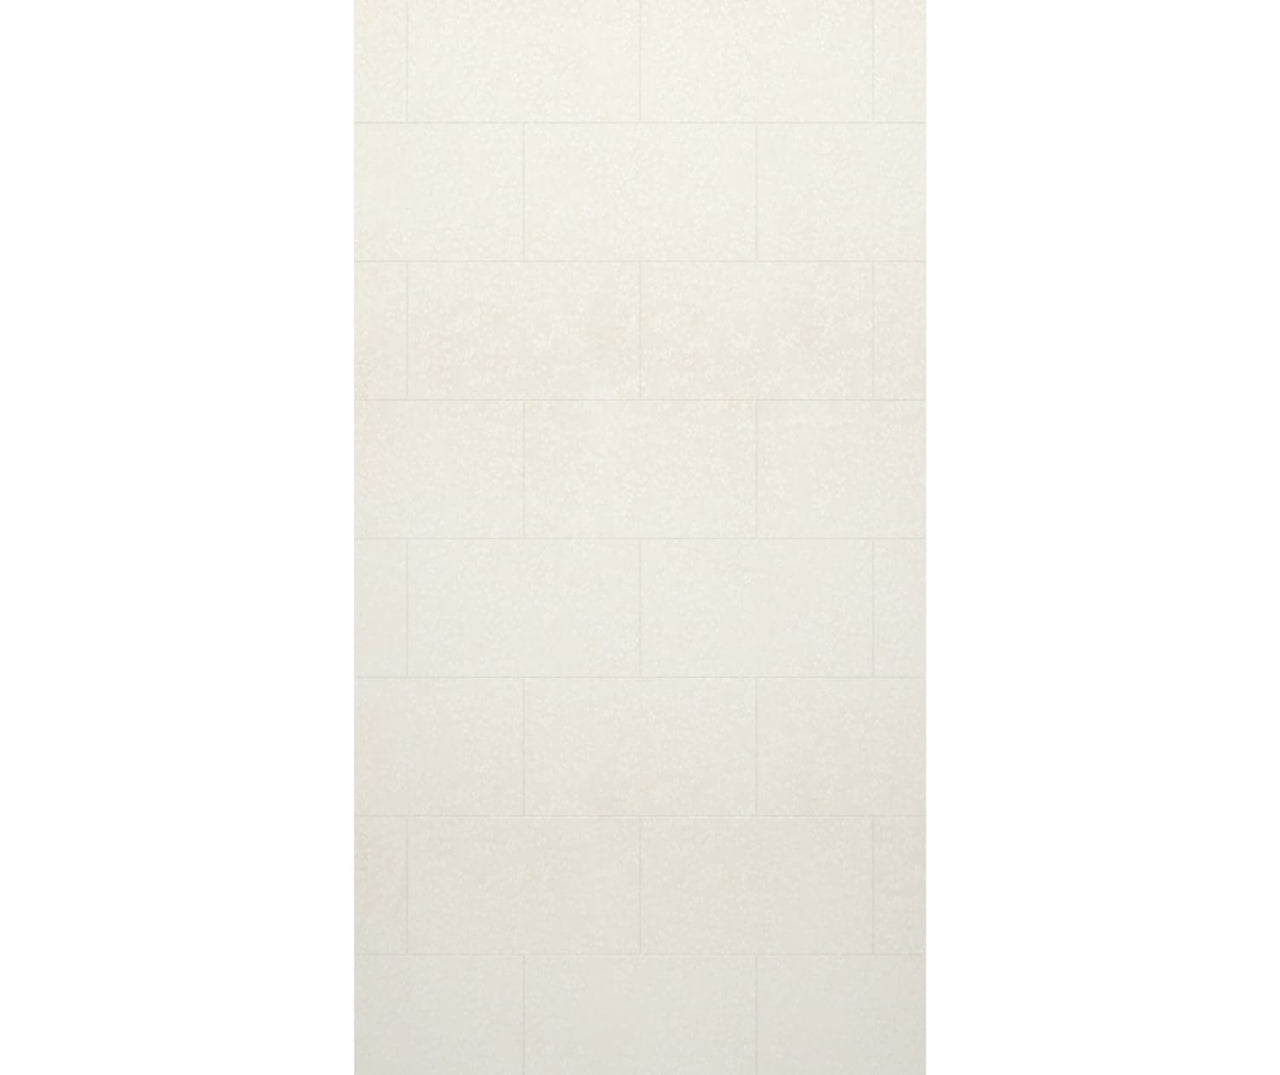 TSMK-7242-1 42 x 72 Swanstone Traditional Subway Tile Glue up Bathtub and Shower Single Wall Panel  - BNGBath